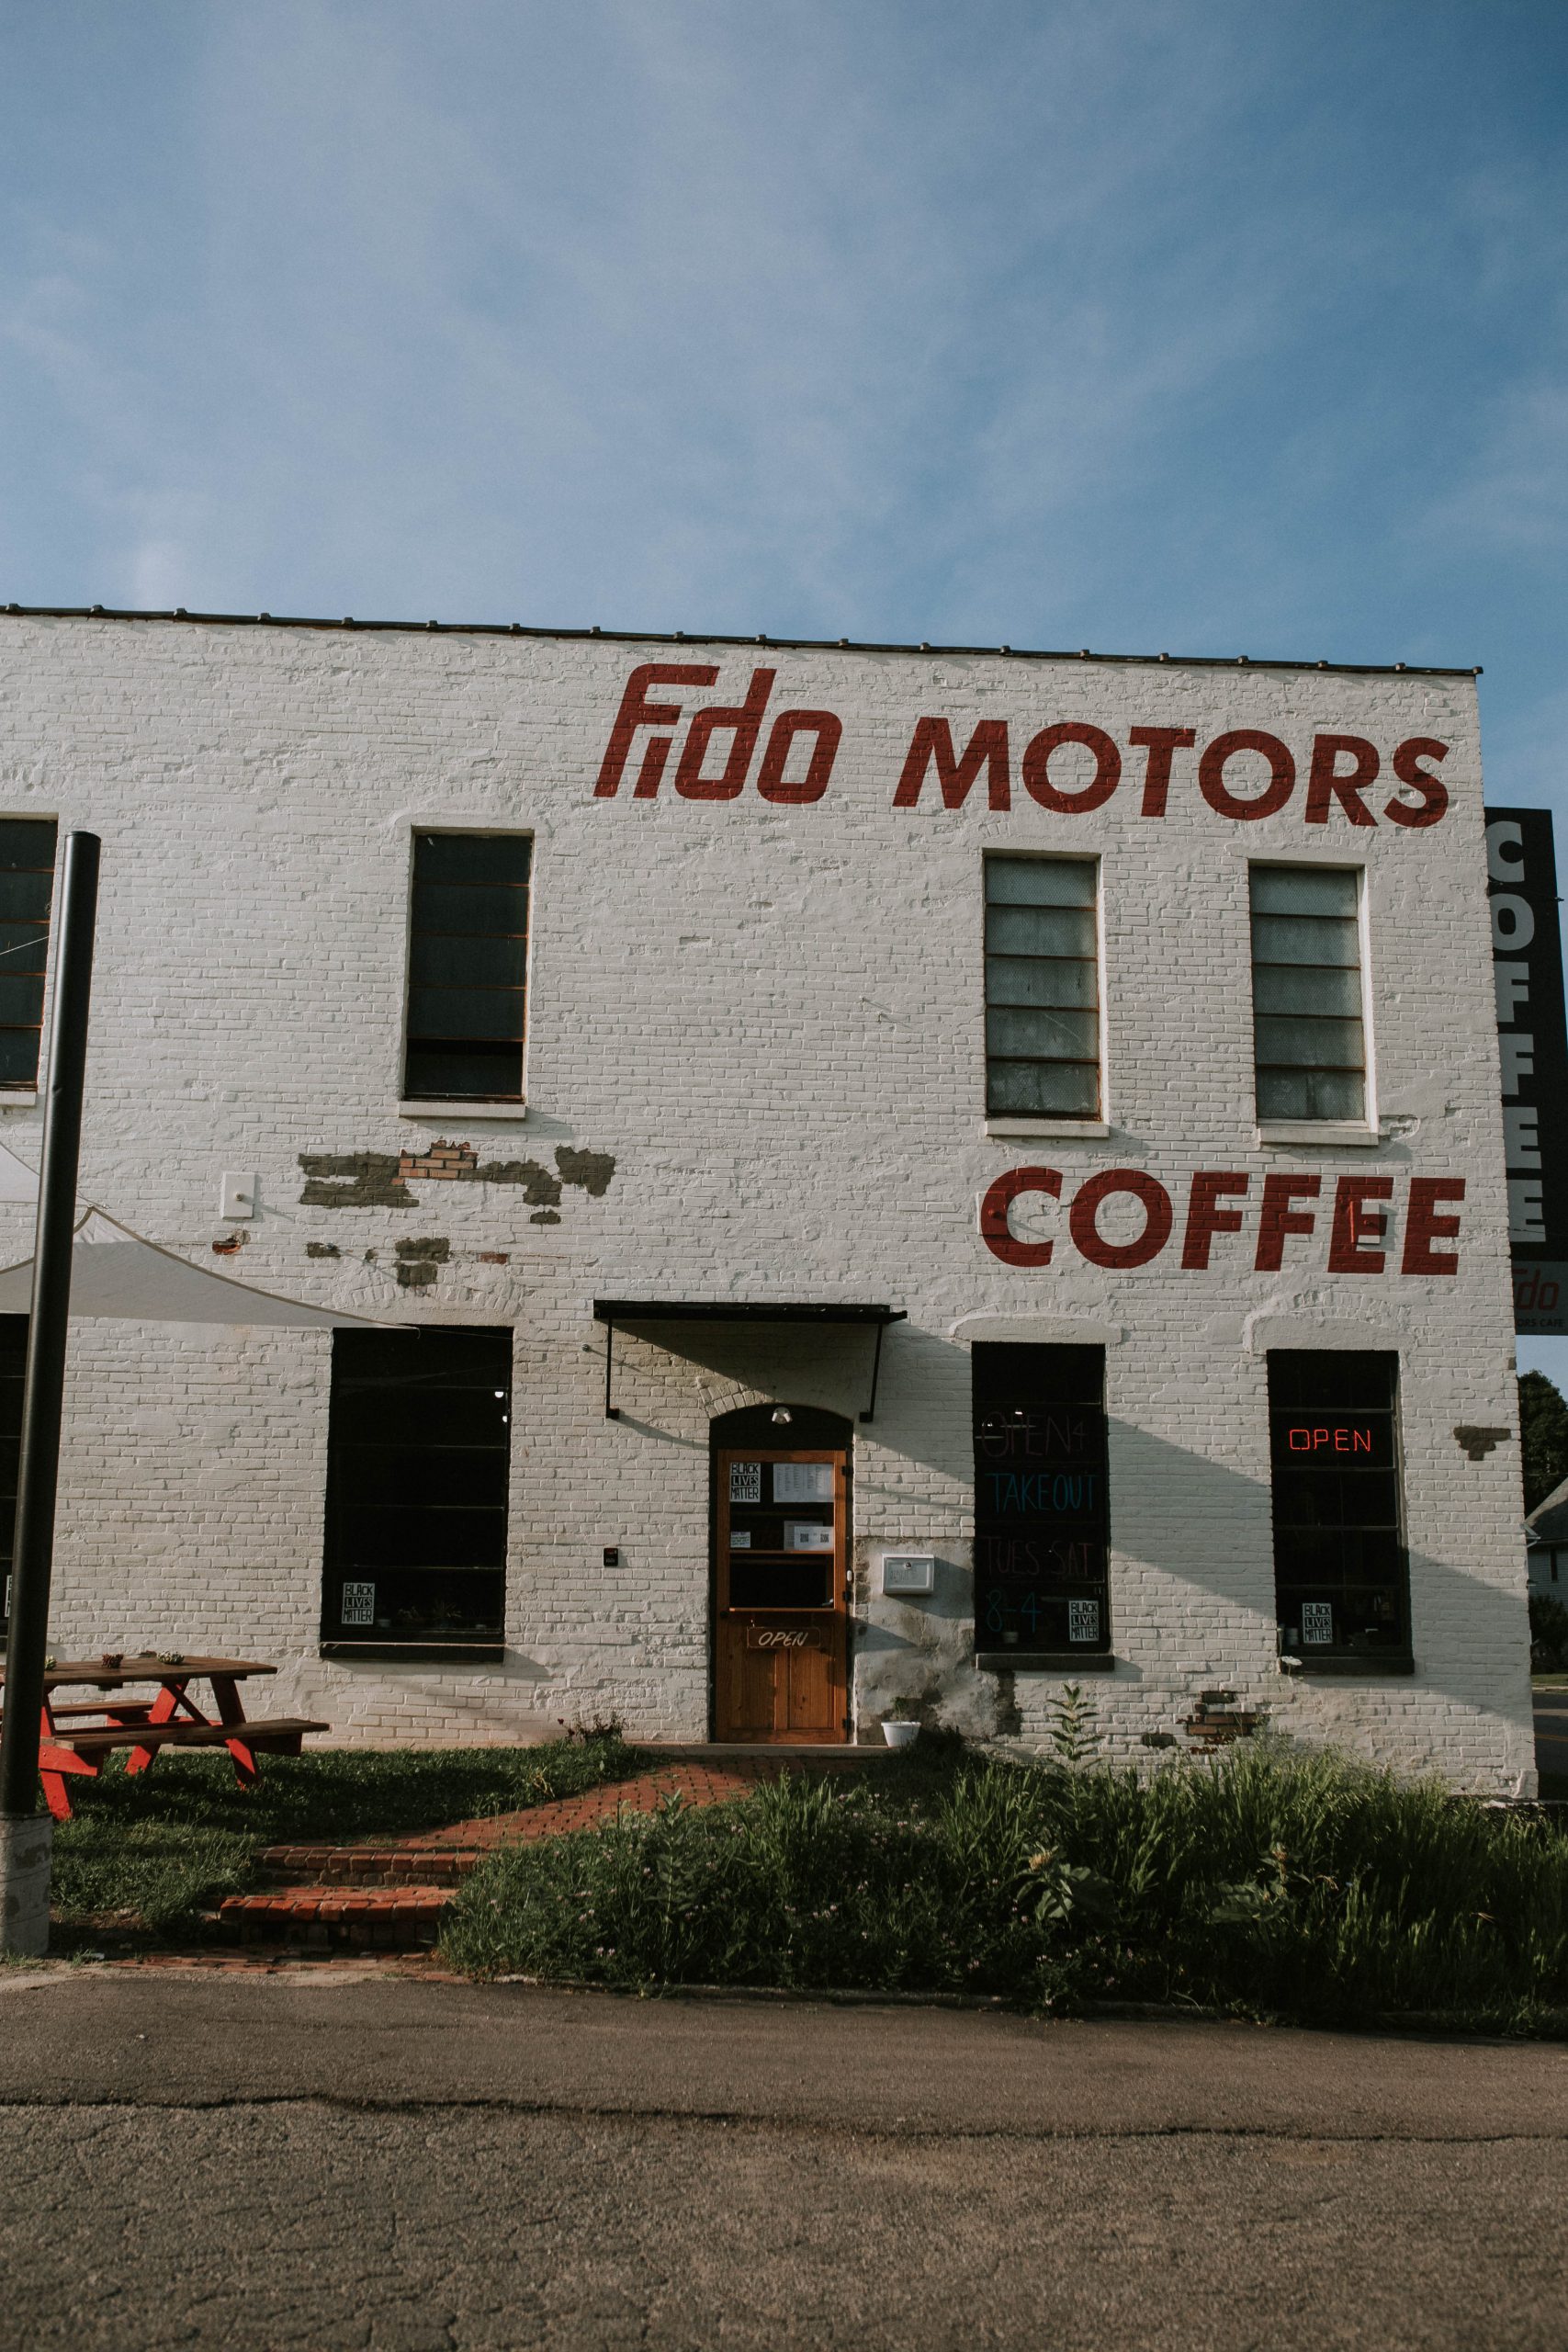 Fido motors Coffee Kalamazoo Michigan